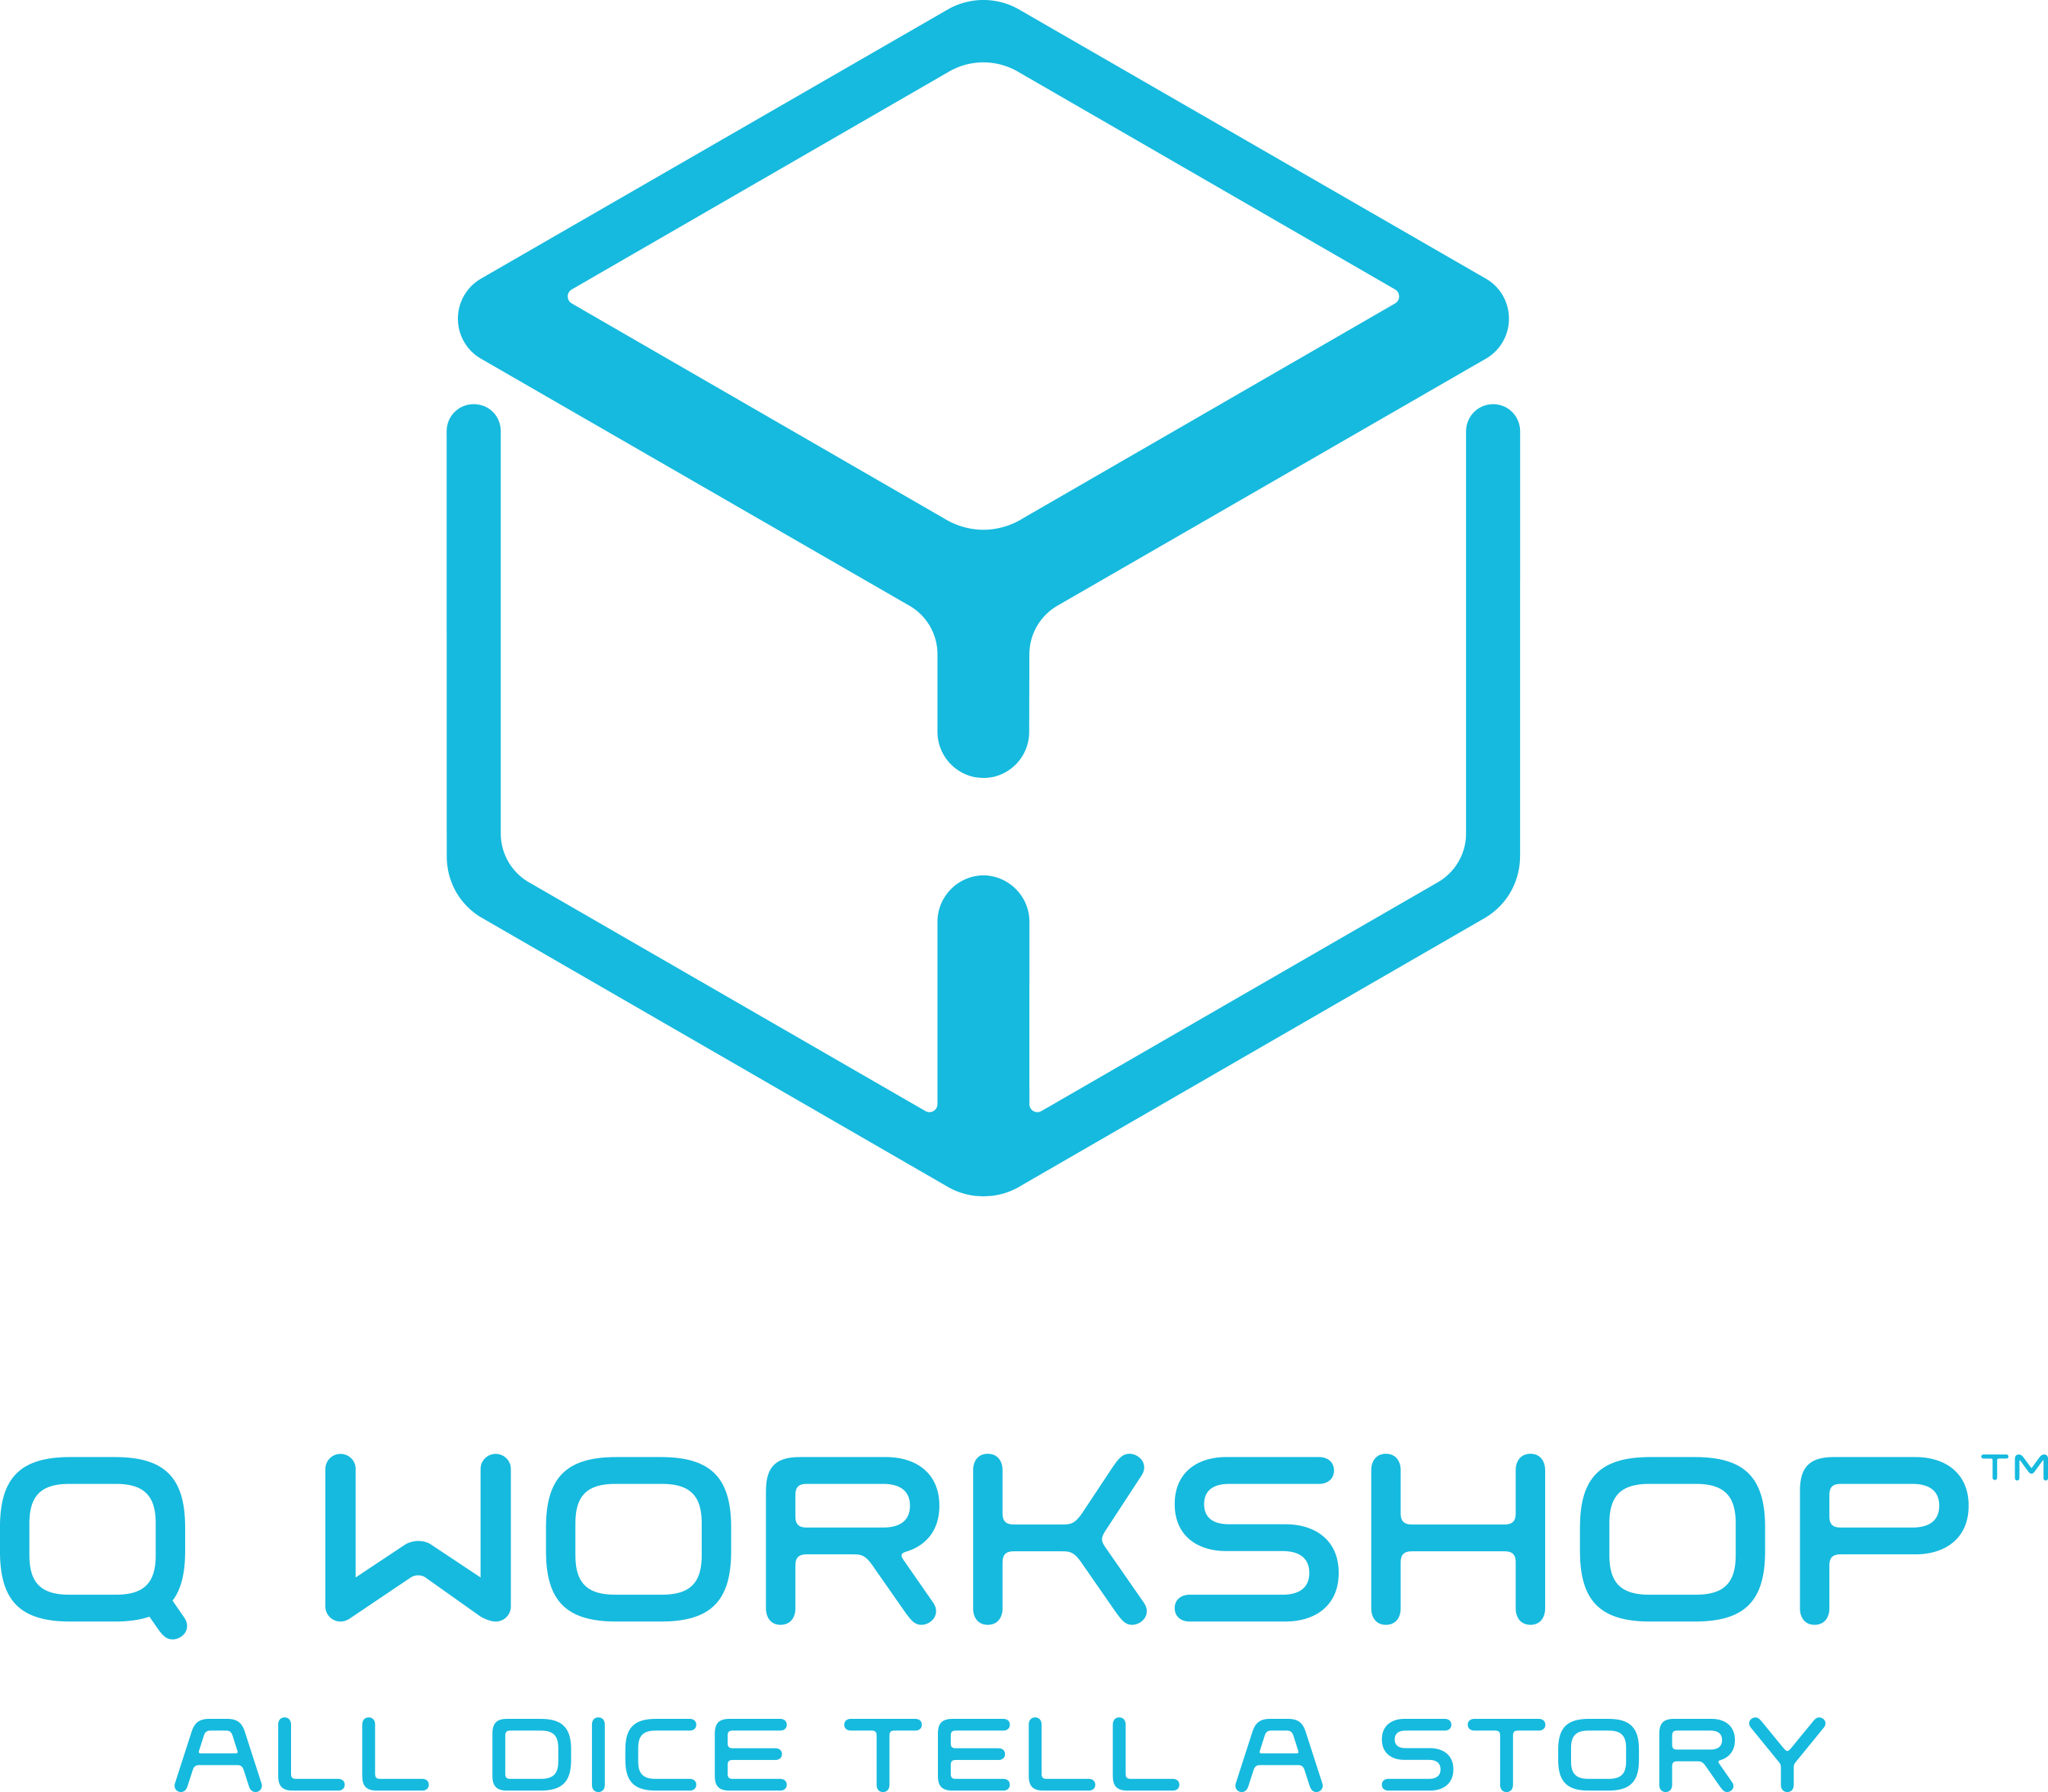 Q WORKSHOP - All dice tell a story - Q workshop - Q WORKSHOP